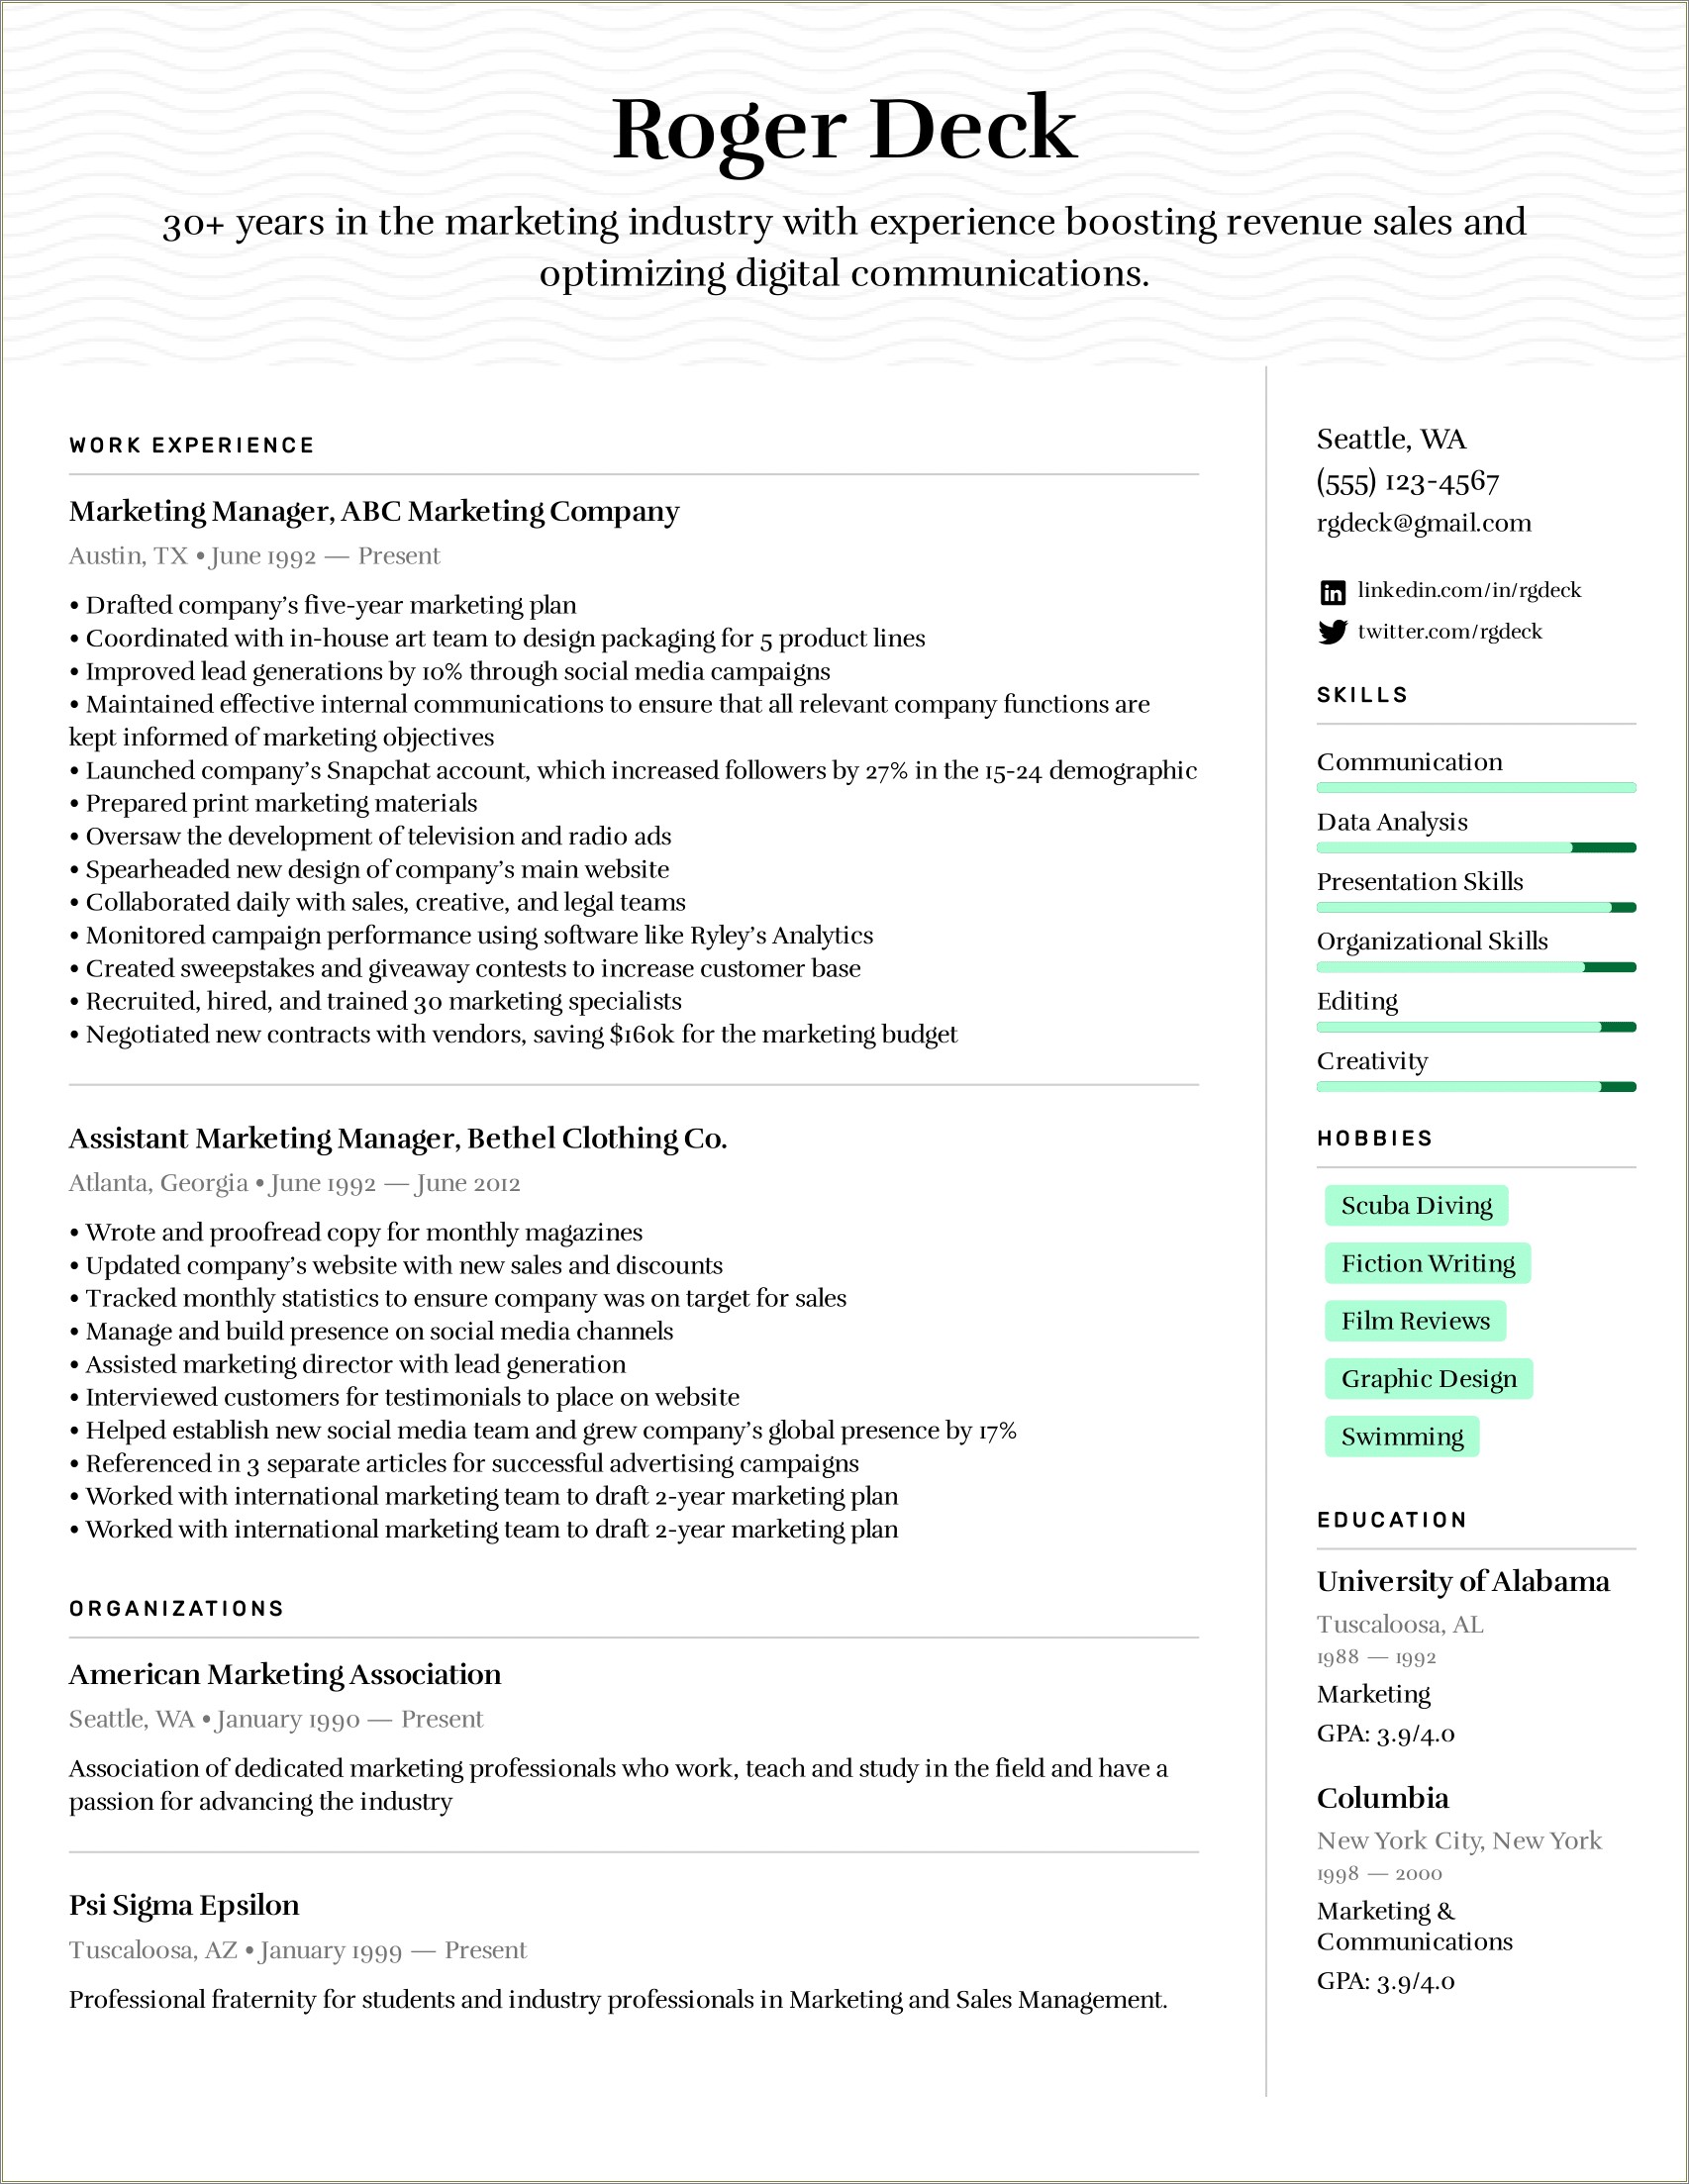 Hiring Manager Job Description Top Resume